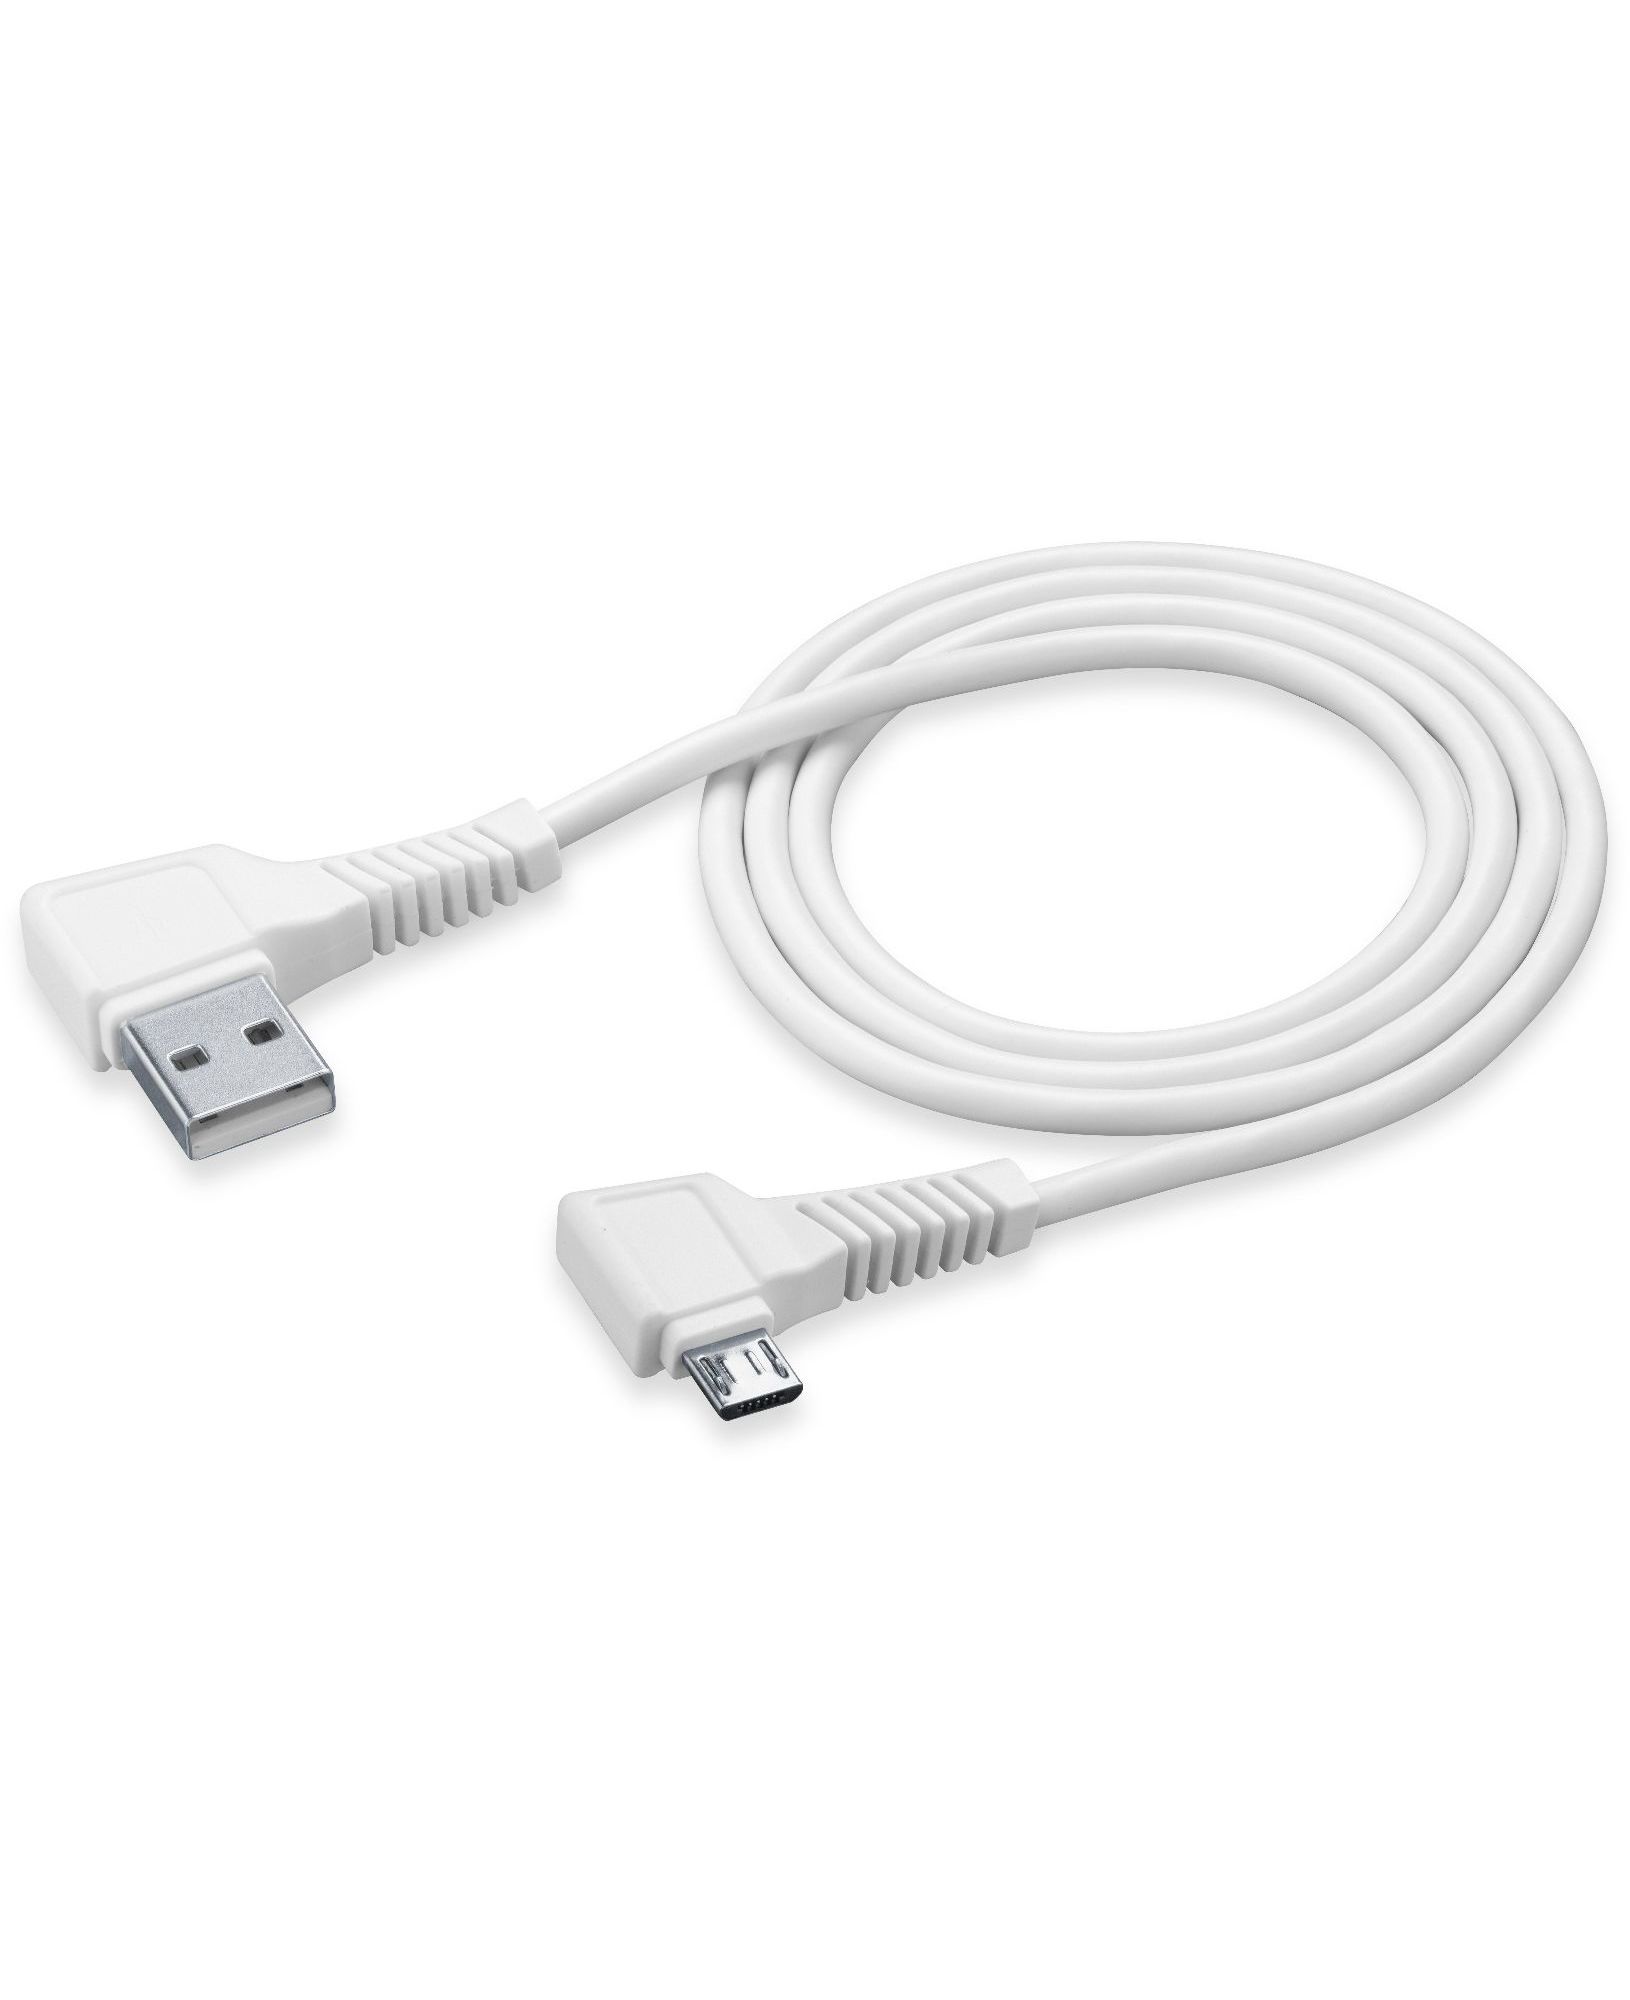 Usb kabel, micro-usb connector hoek 1,2m, wit